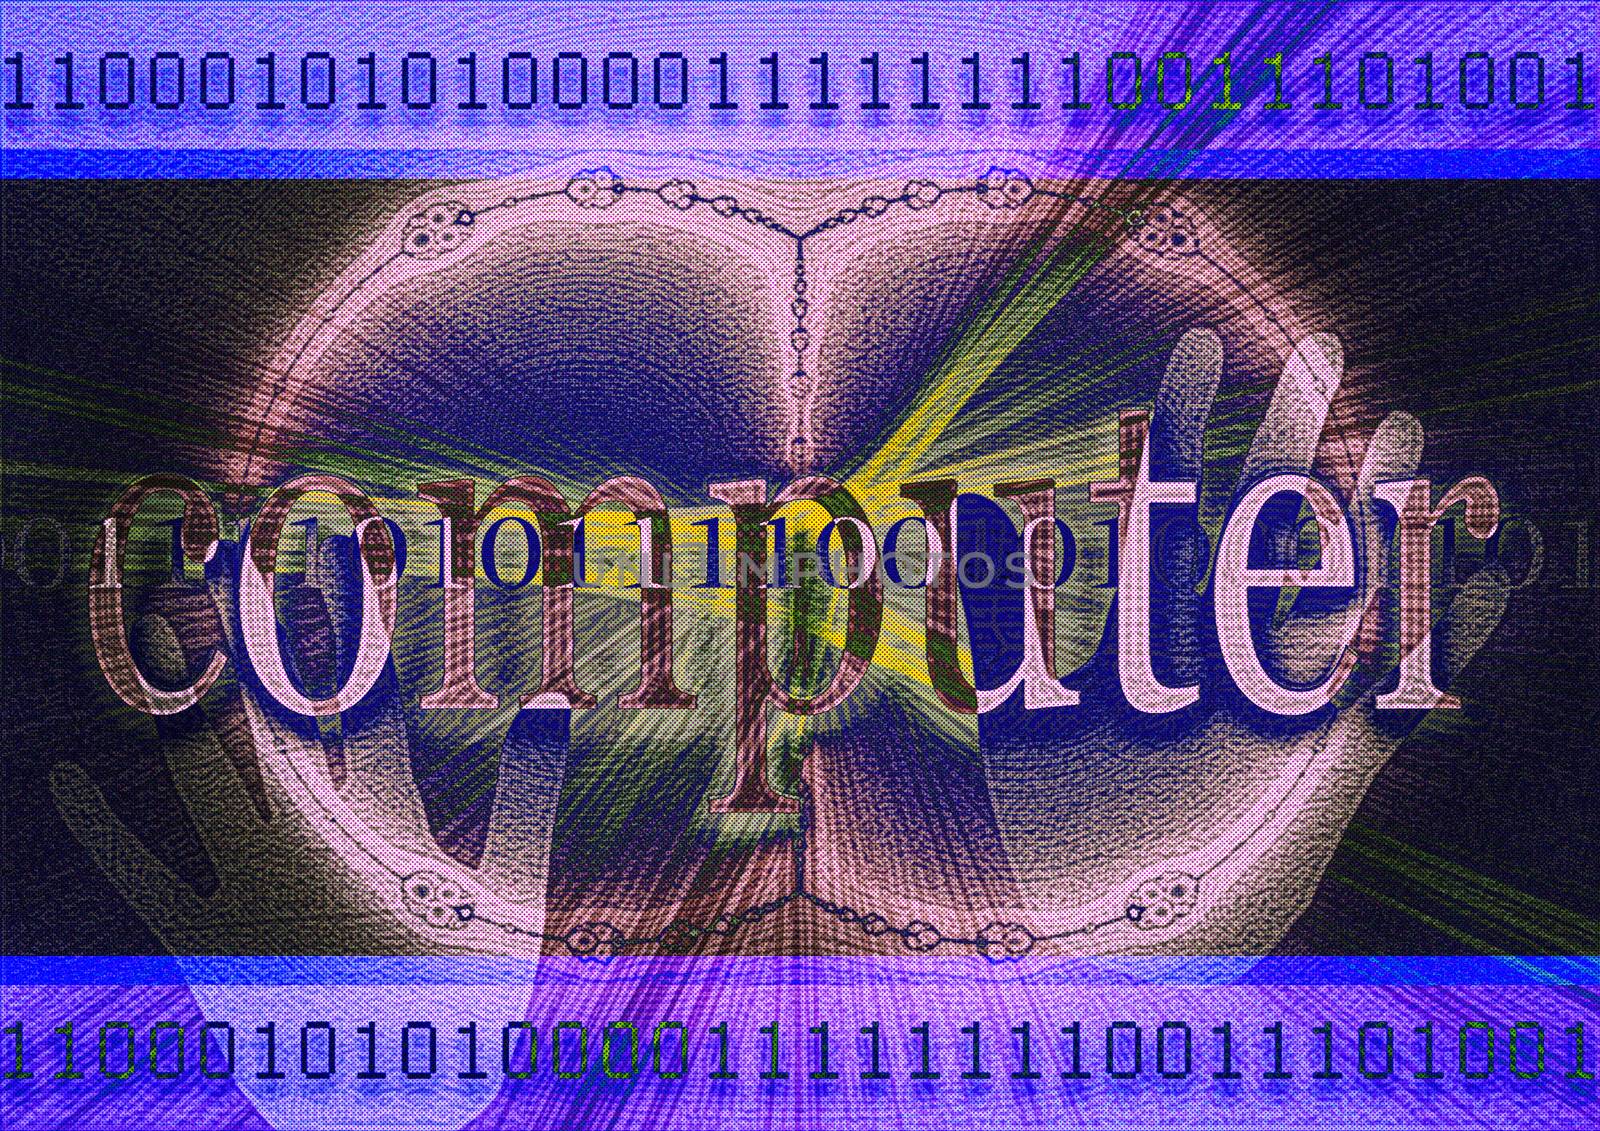 Bio Computer by creativ000creativ